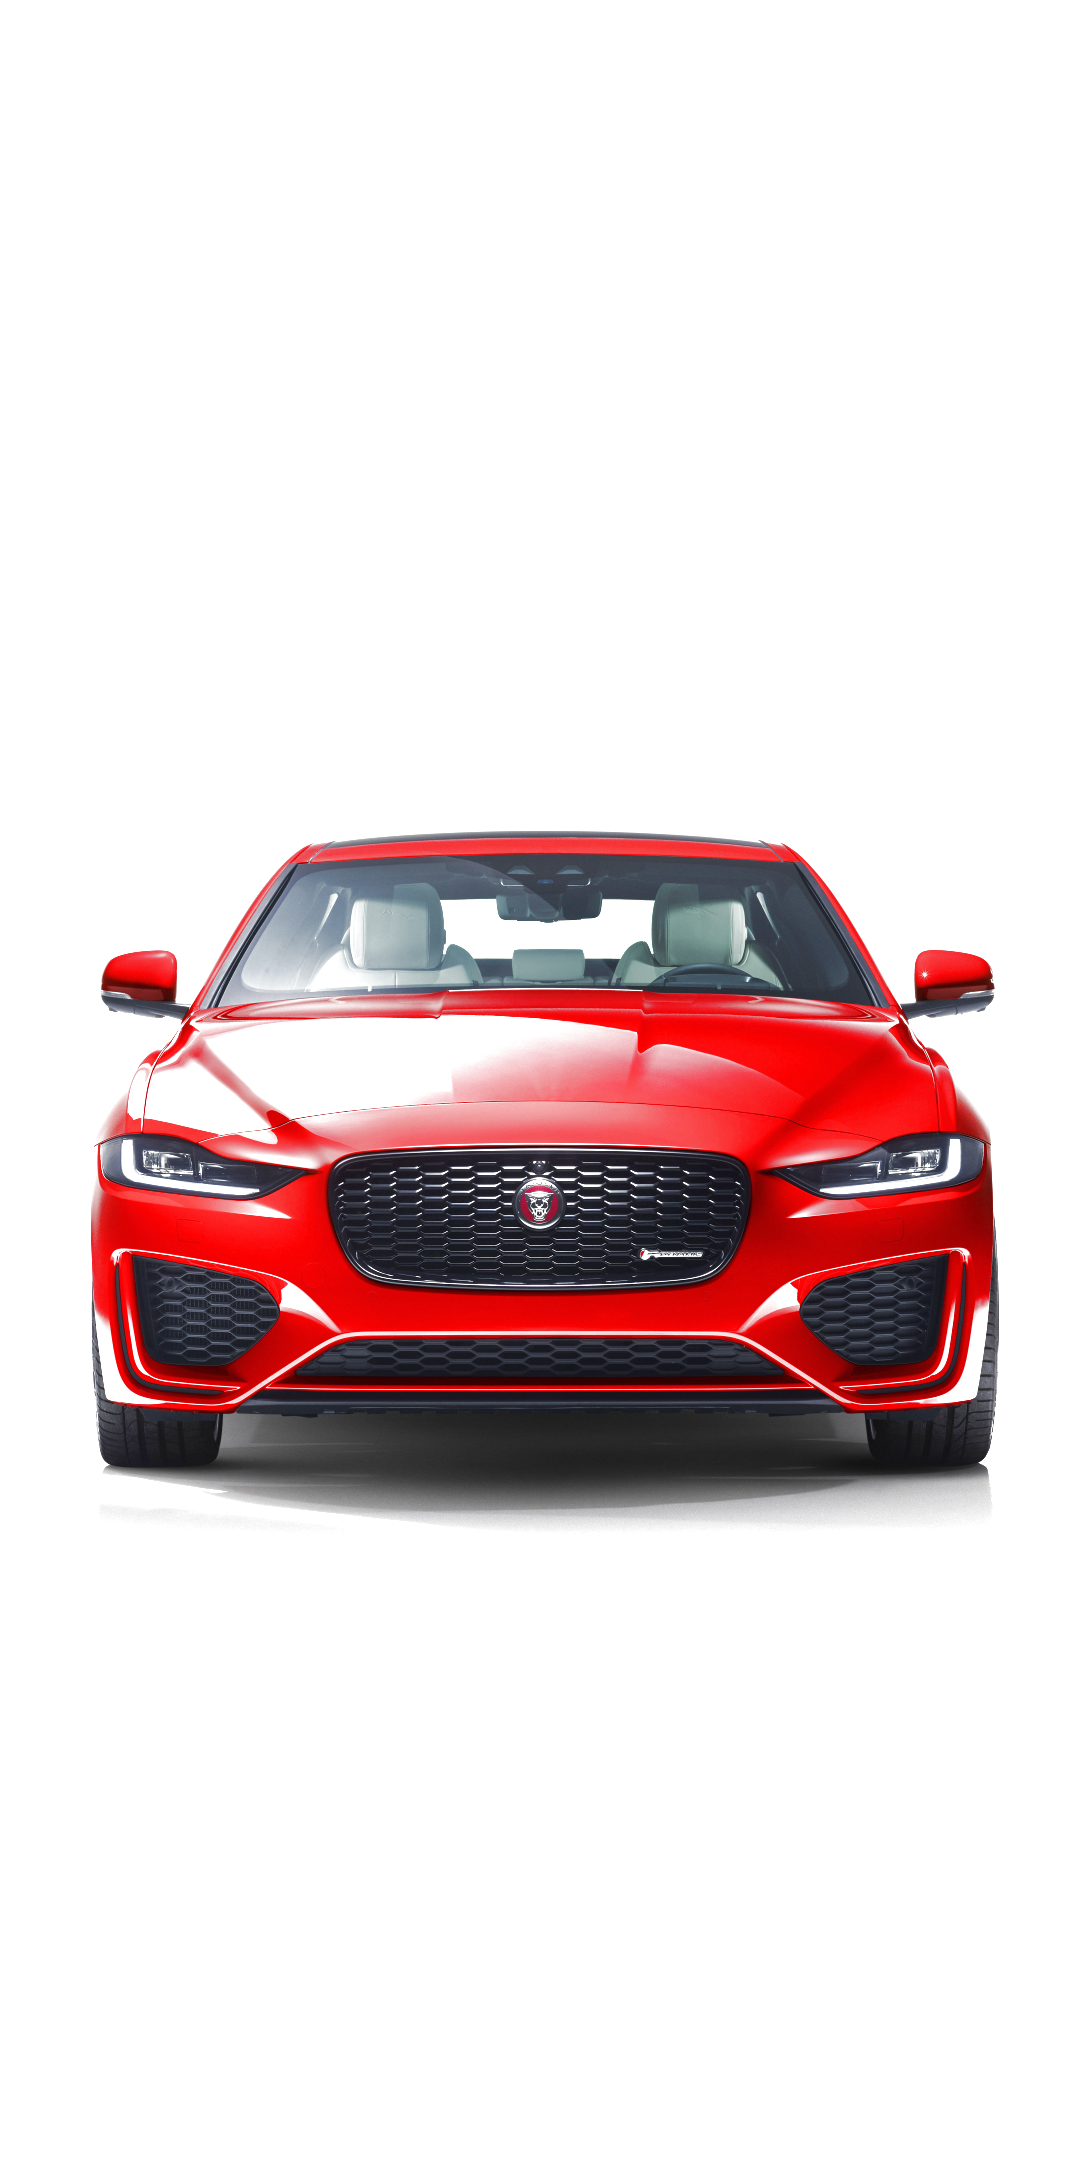 Baixar papel de parede para celular de Jaguar, Carro, Jaguar Xe, Veículo, Veículos, Carro Prateado, Carros Jaguar gratuito.